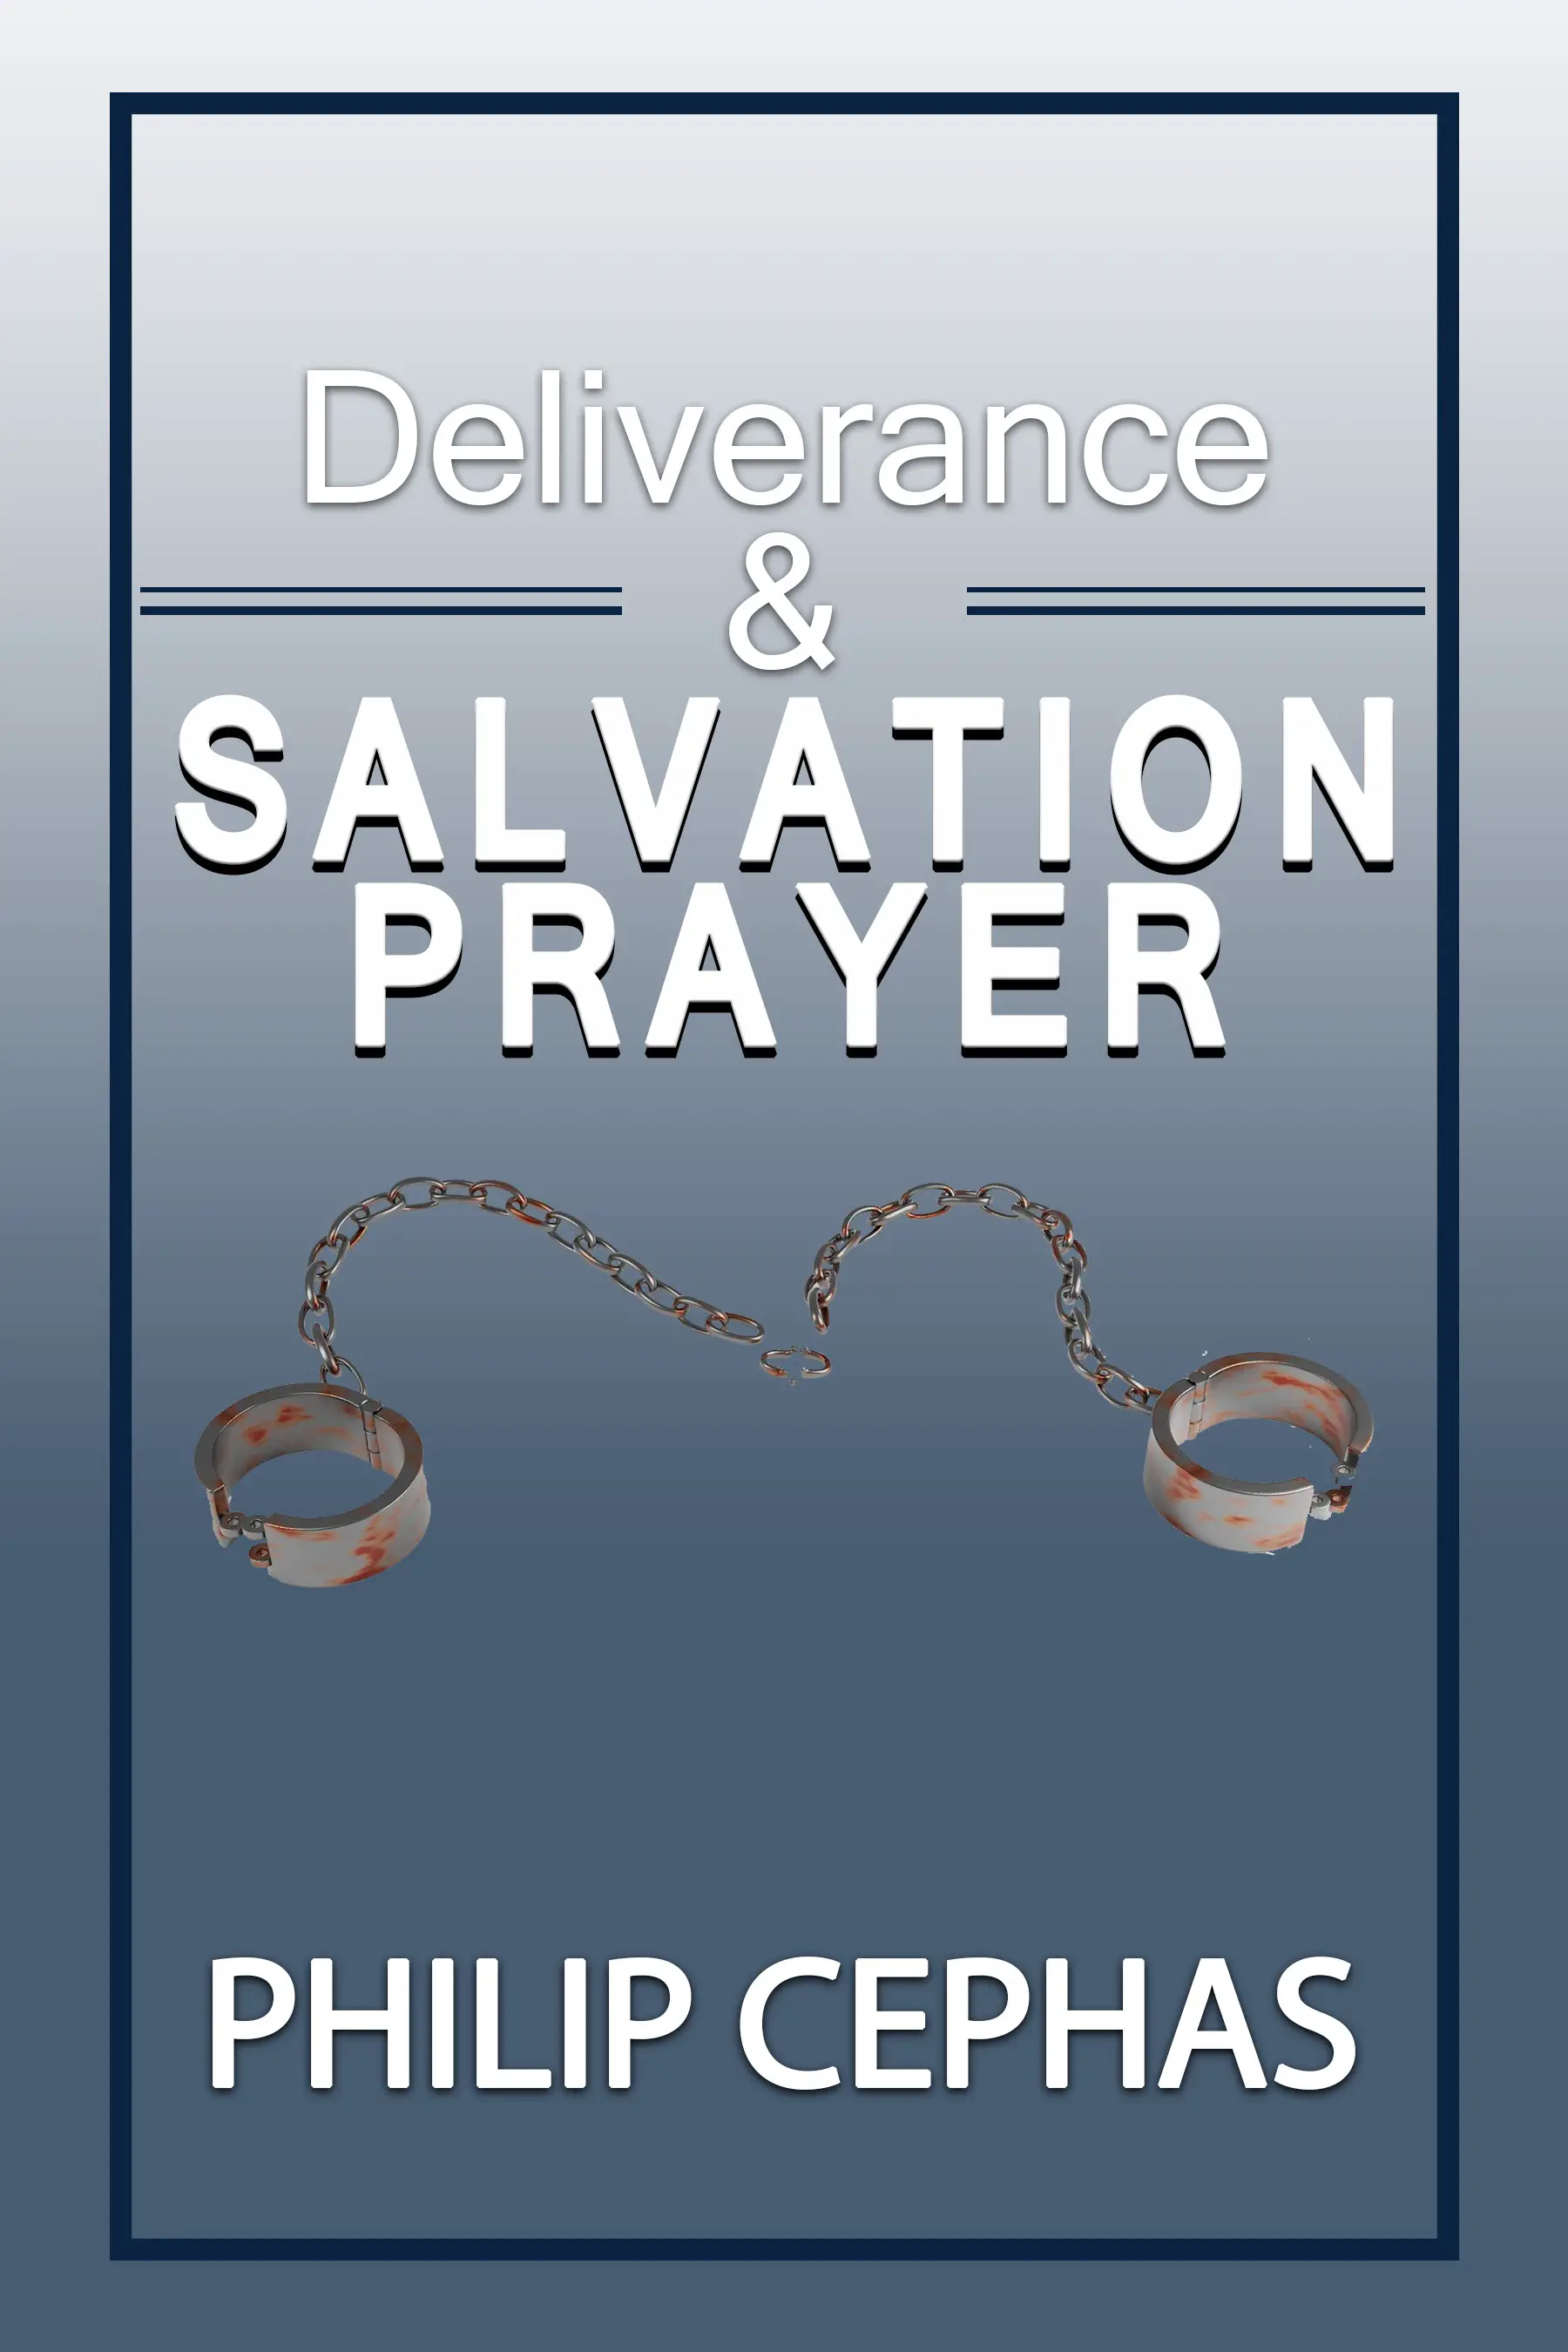 DOWNLOAD PDF: Deliverance & Salvation Prayer by Apostle Philip Cephas 22